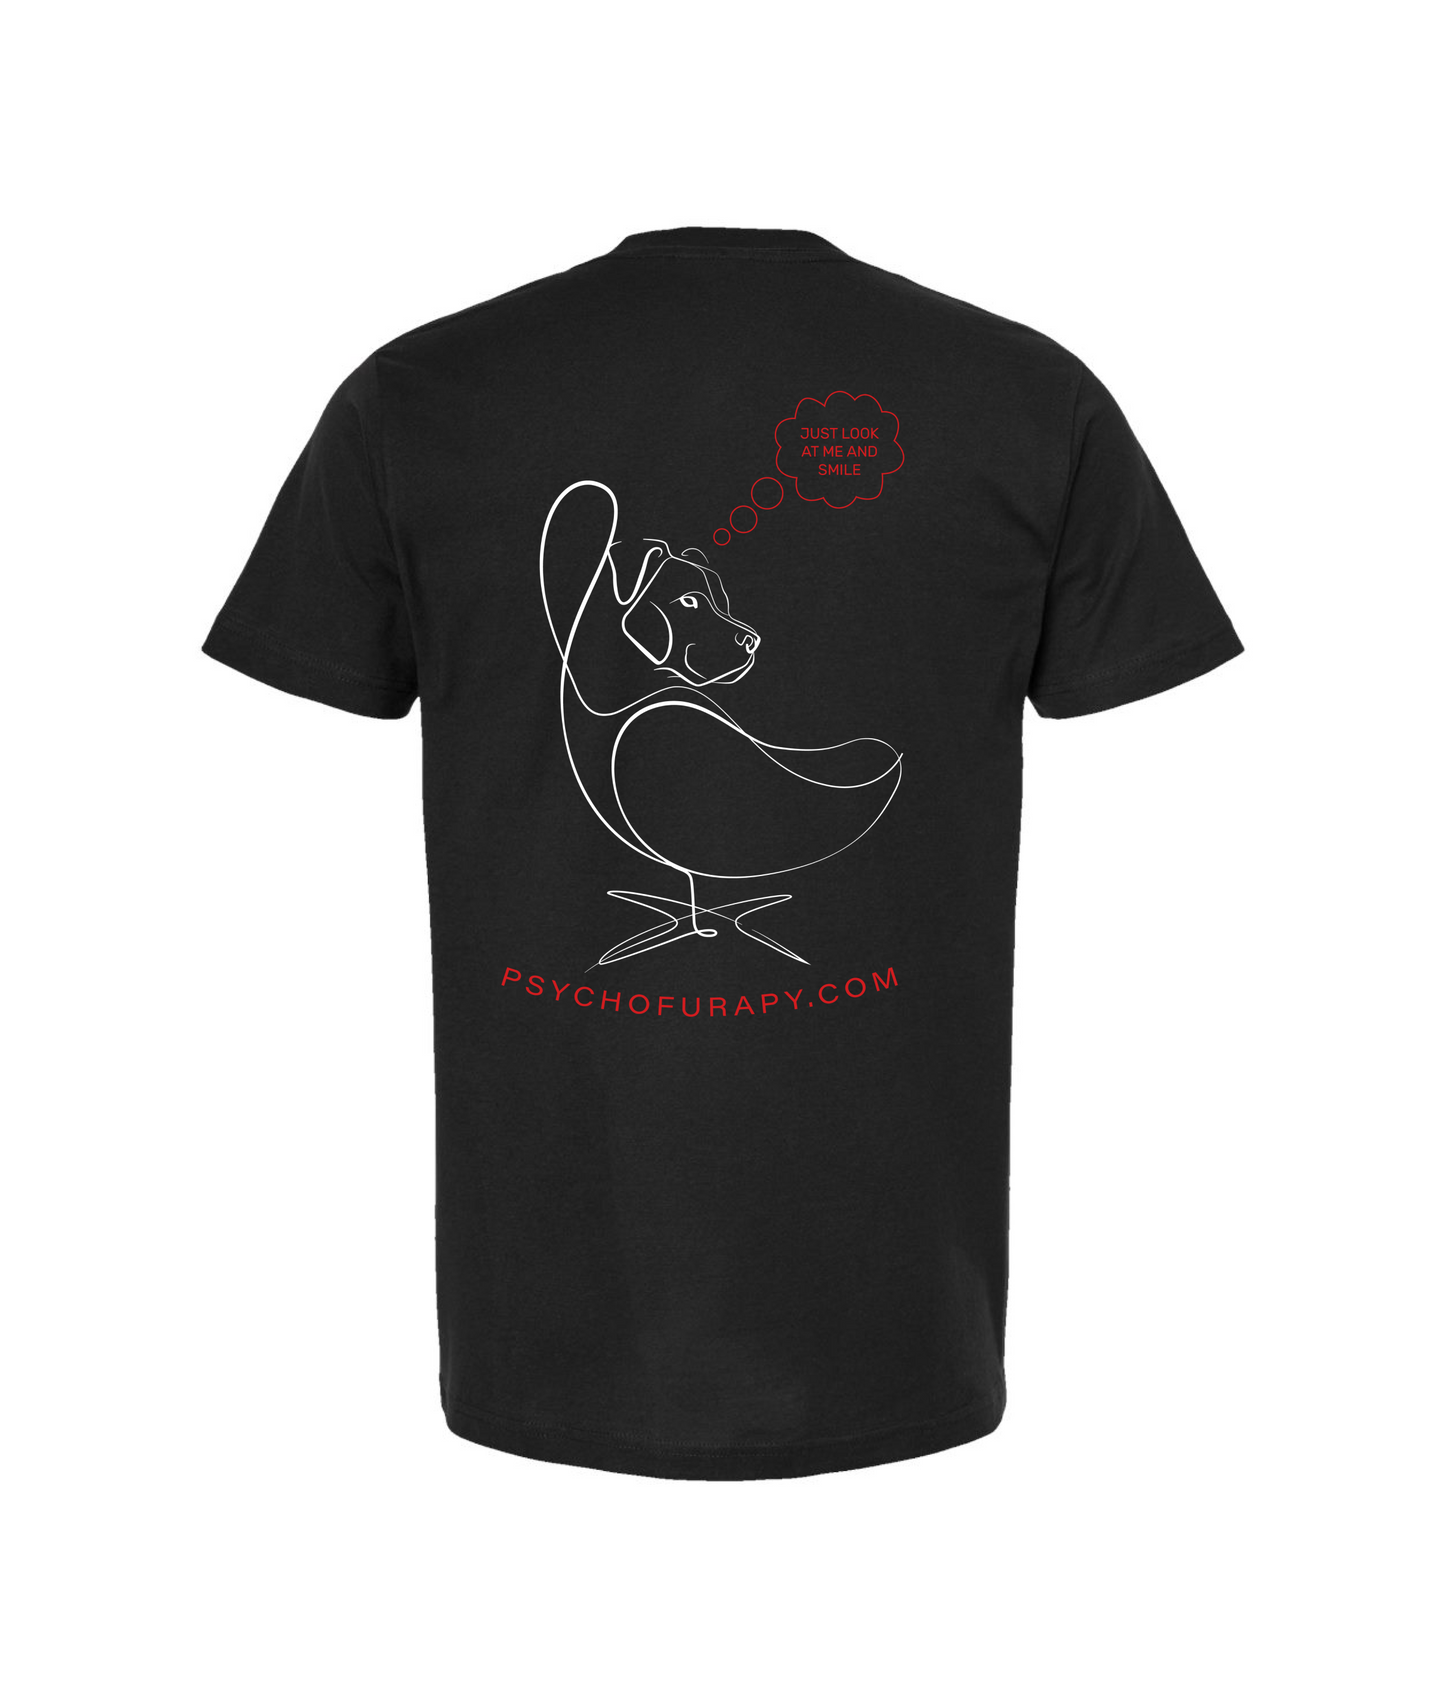 pyschofurapy.com - I <3 MY FURAPIST - Black T-Shirt